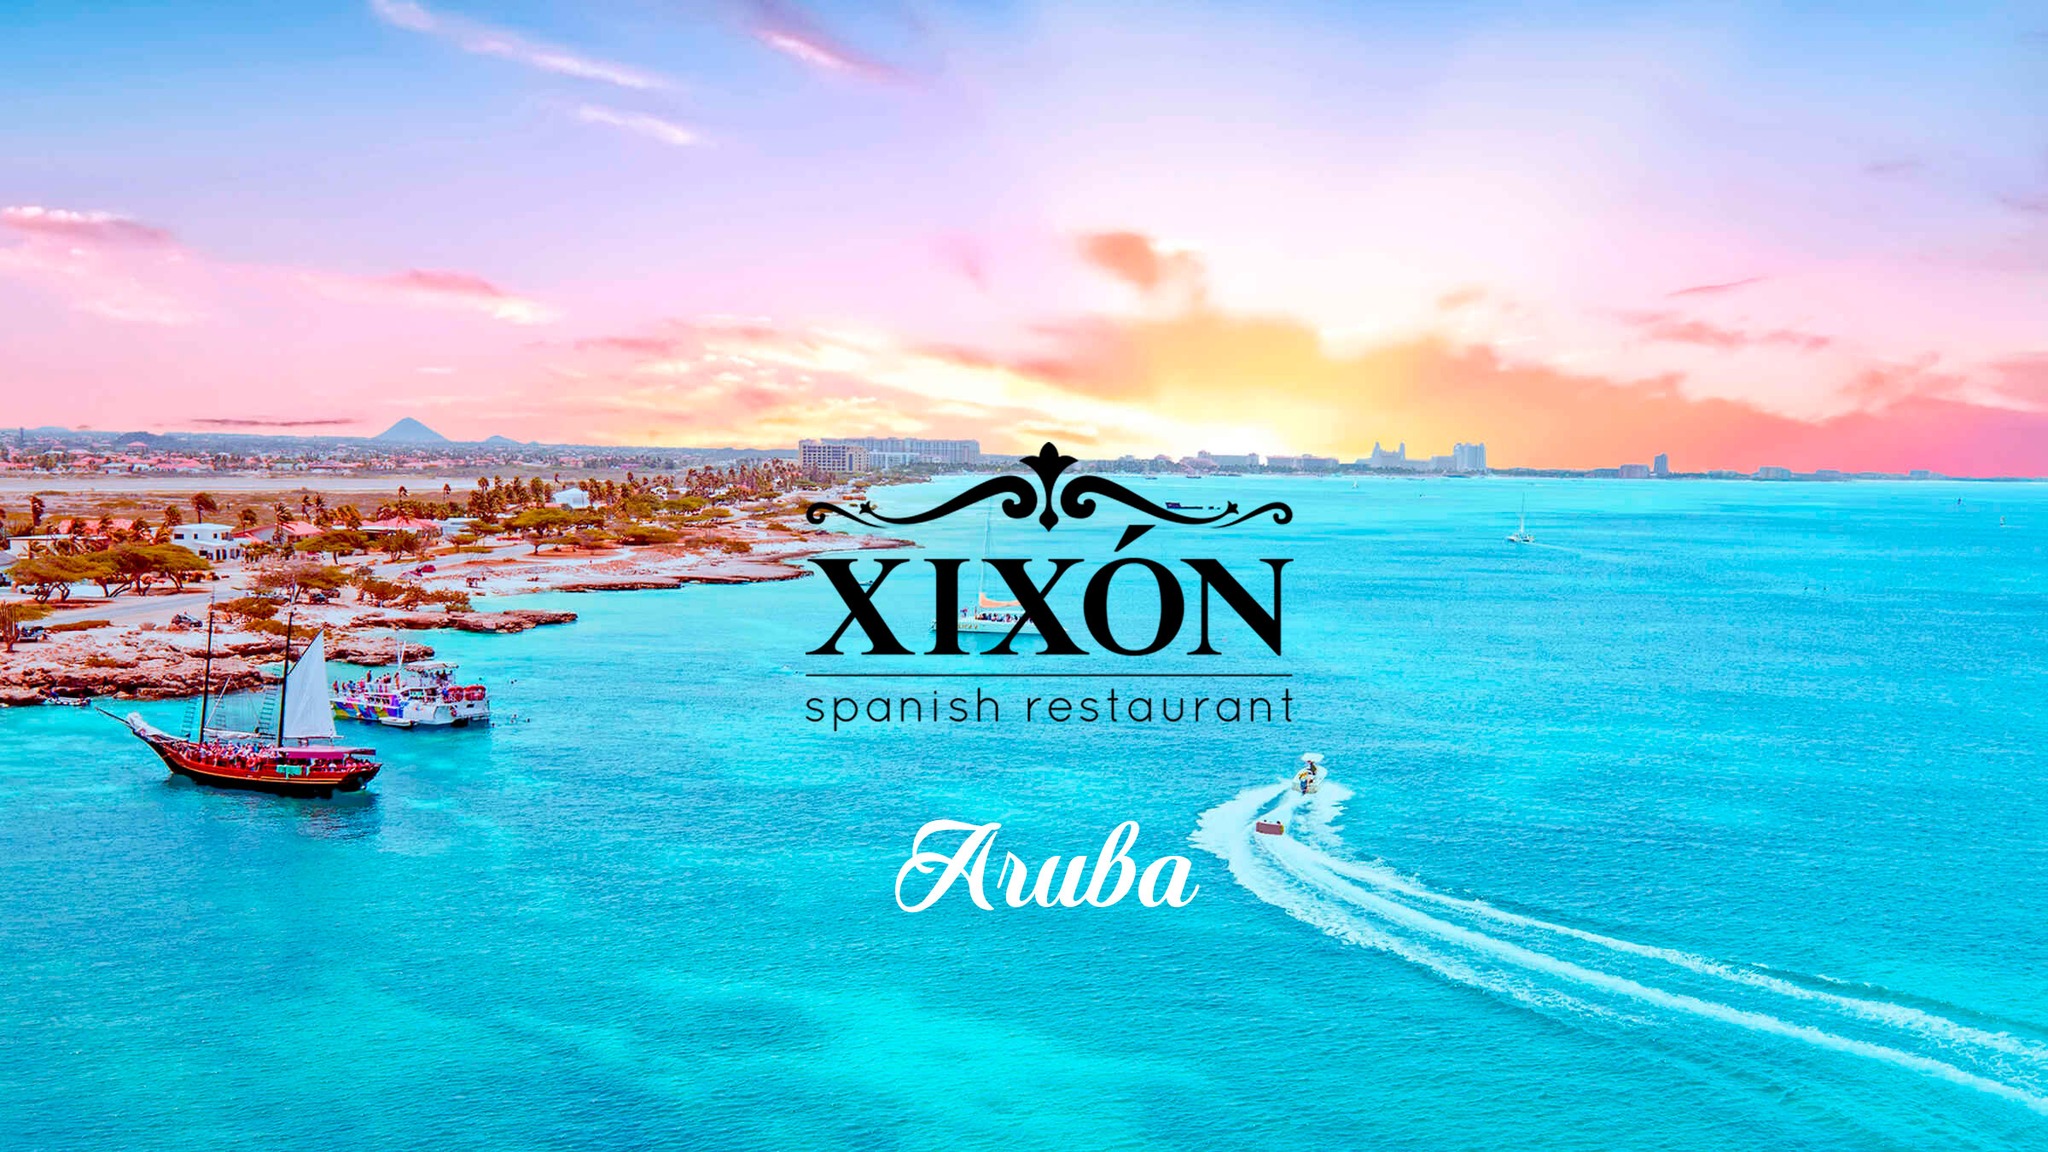 Xixon New Spanish Restaurant in Aruba